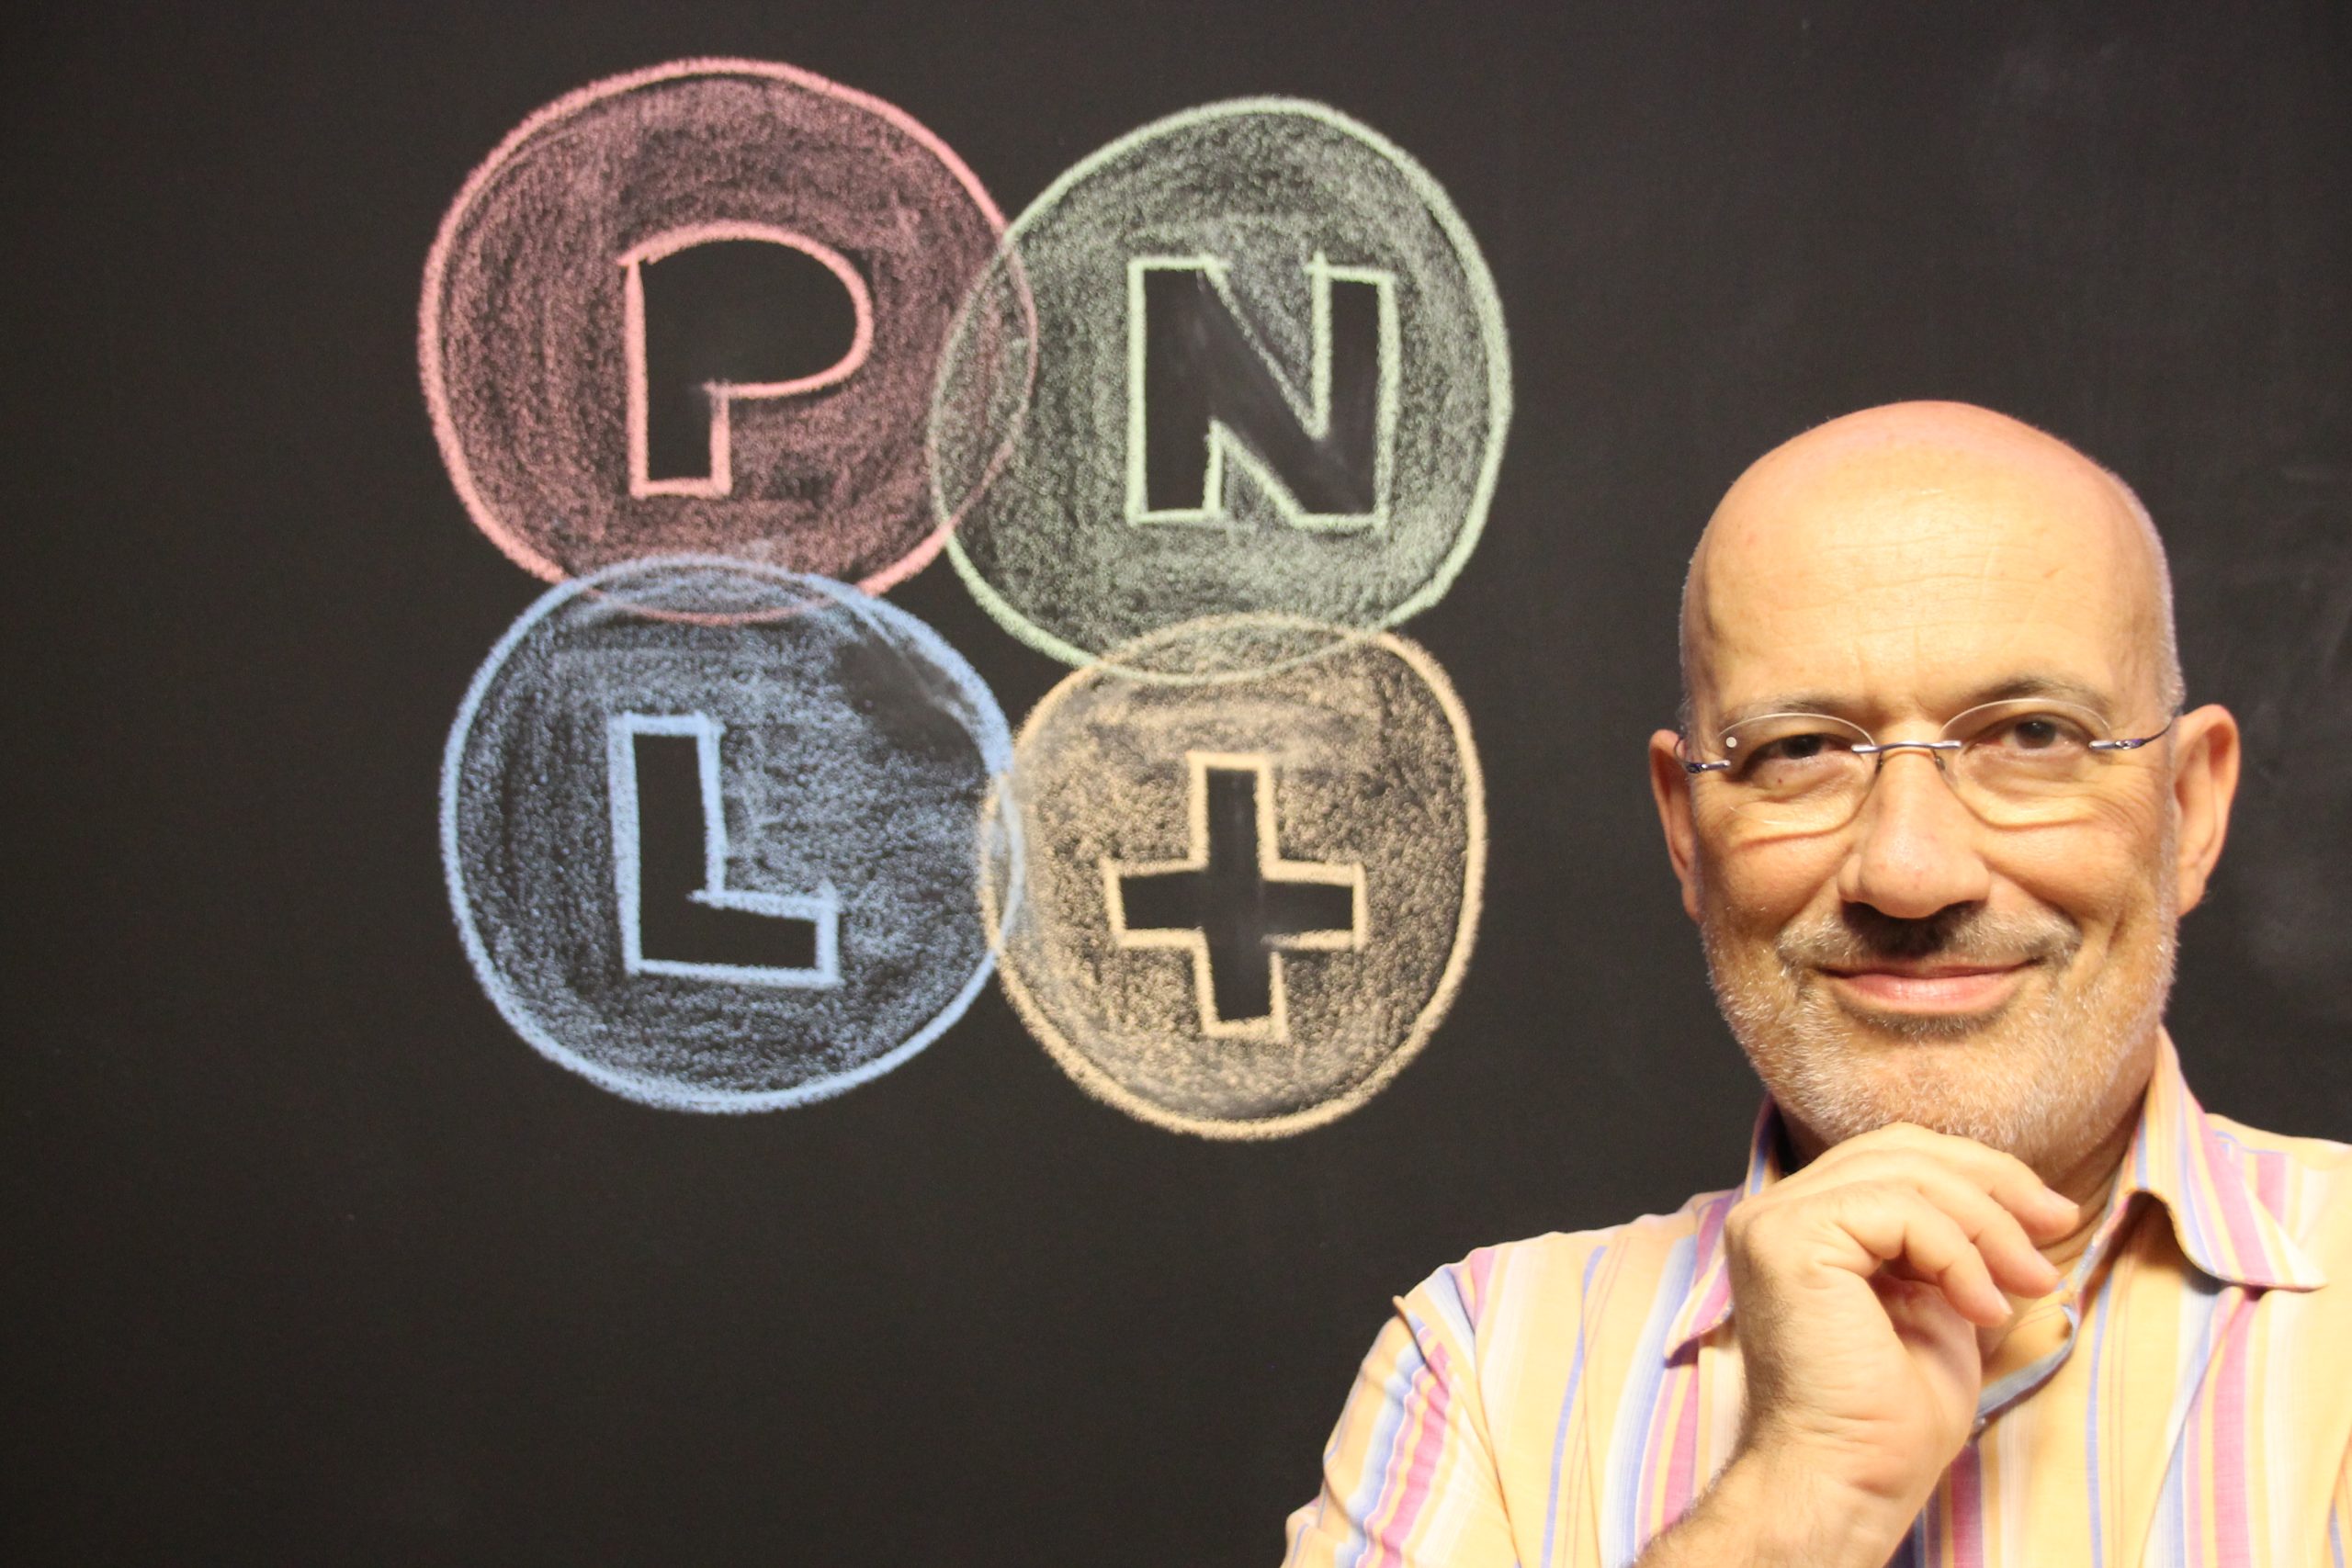 Marcel genestar con PNL Plus